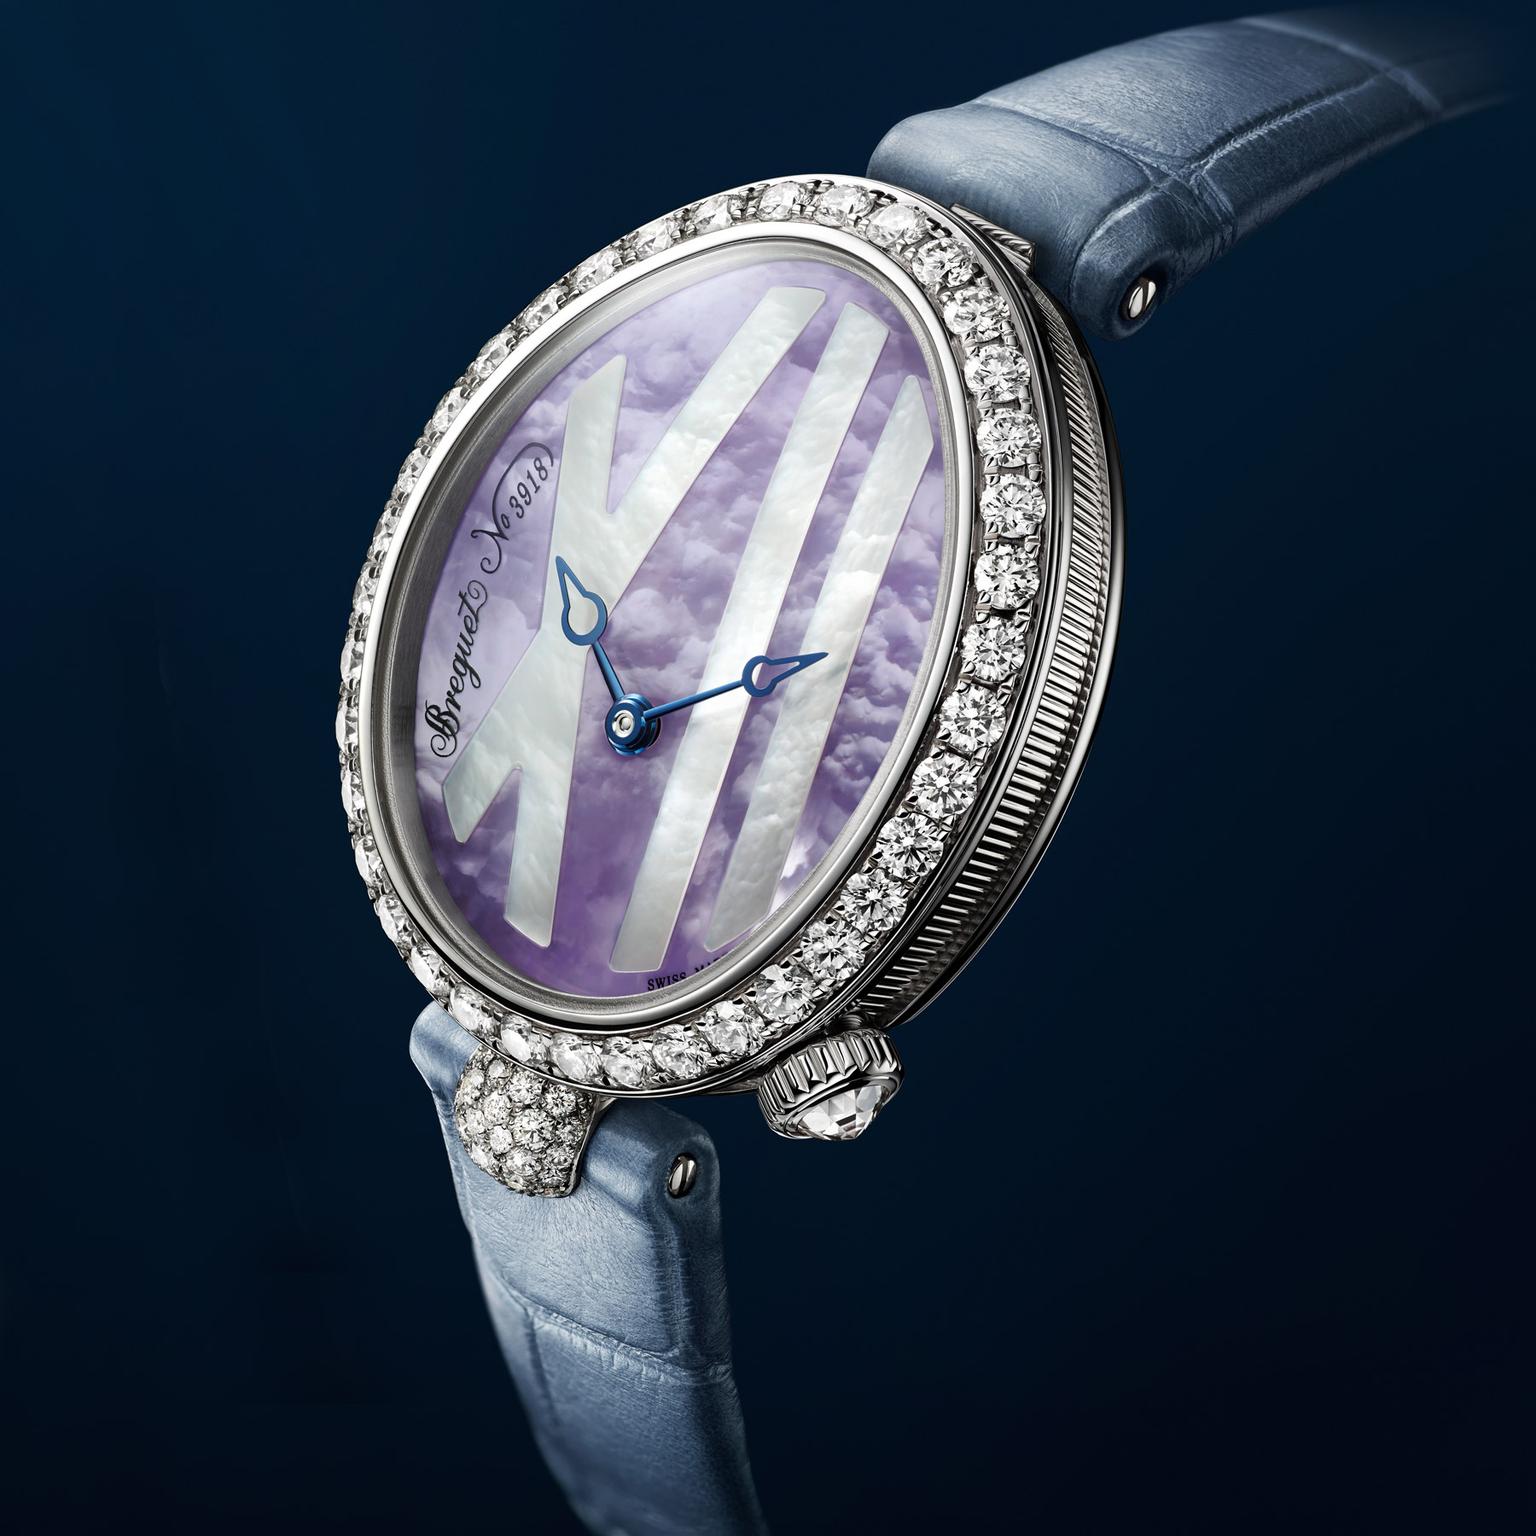 Breguet Reine de Naples Princesse Mini 9818 watch